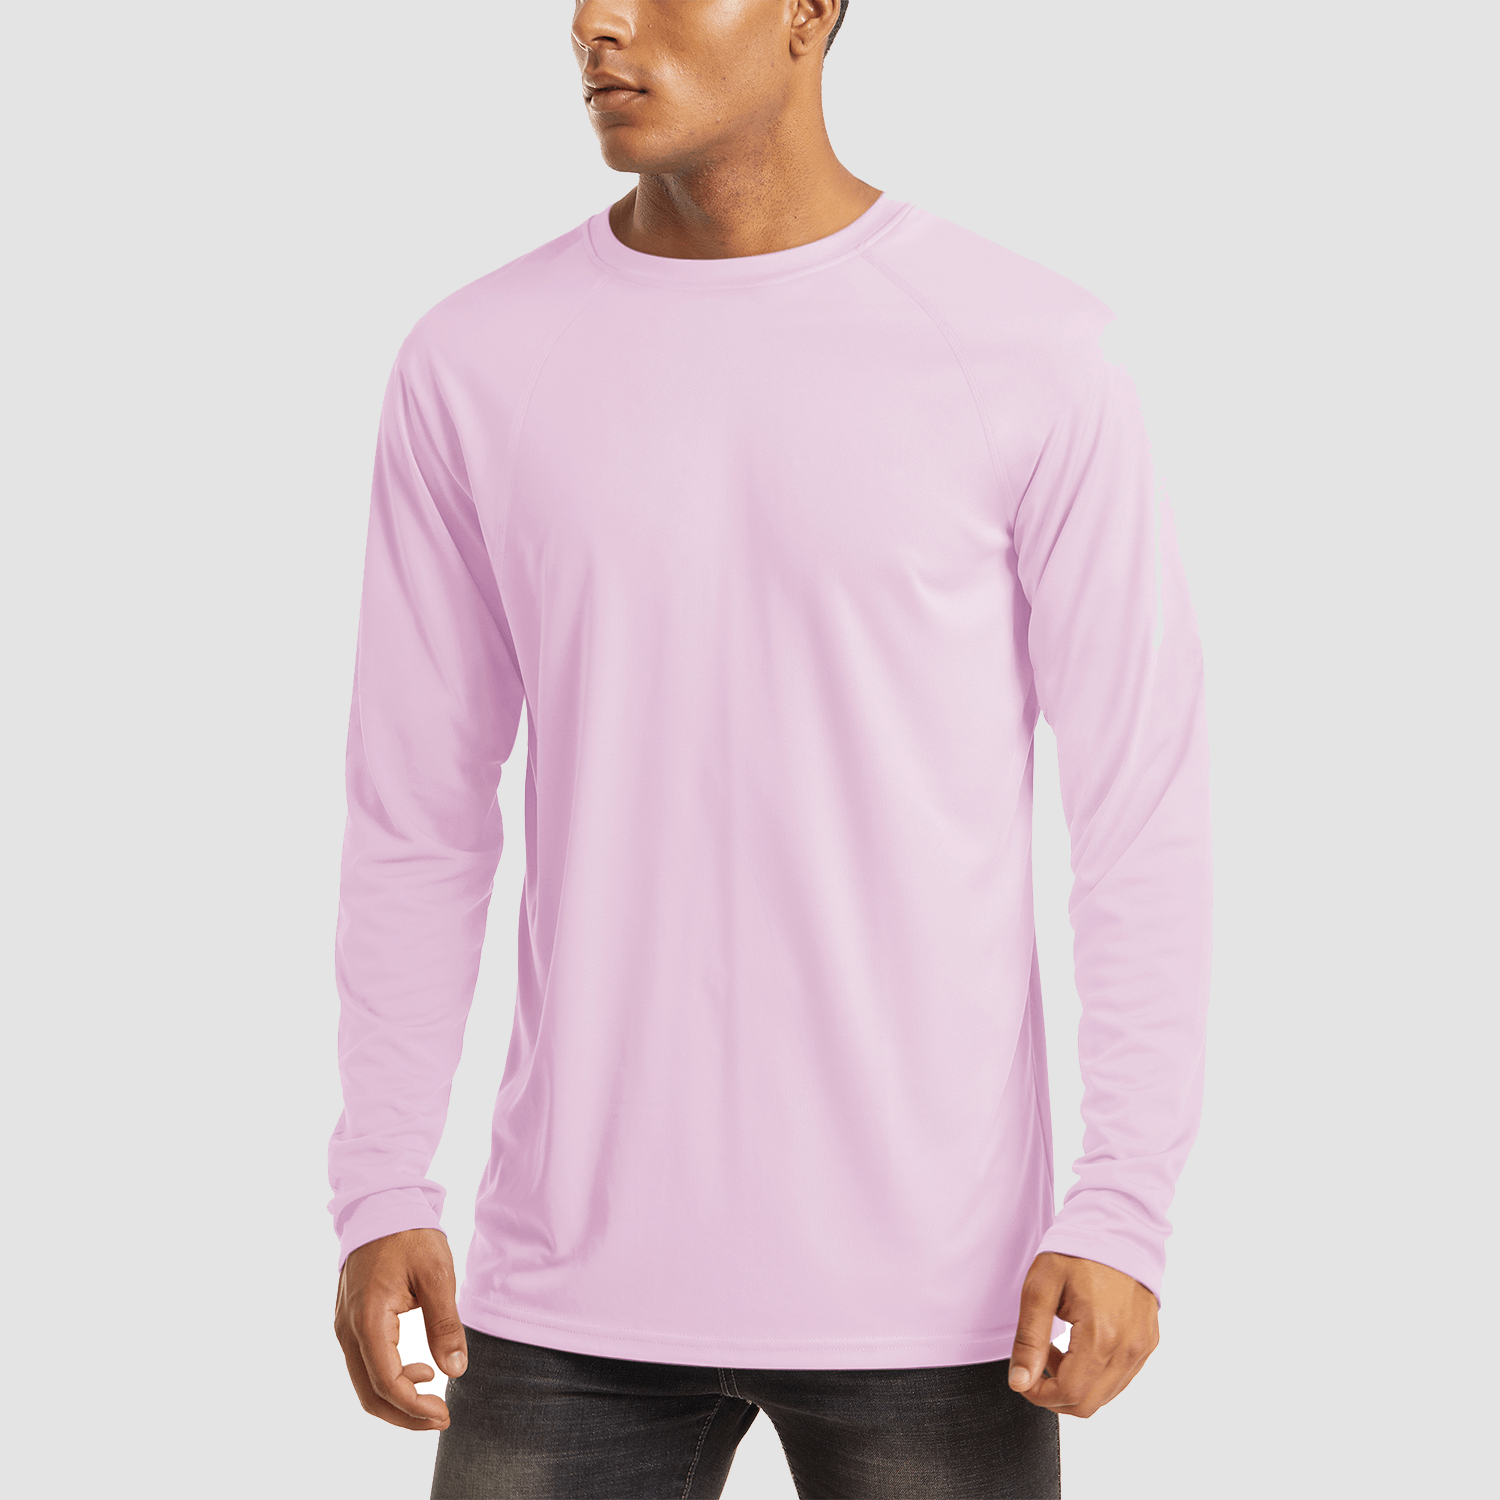 【Buy 4 Get 4th Free】Men's Long Sleeve Hooded Shirt UPF 50+ Athletic Shirt, Light Pink / XXL